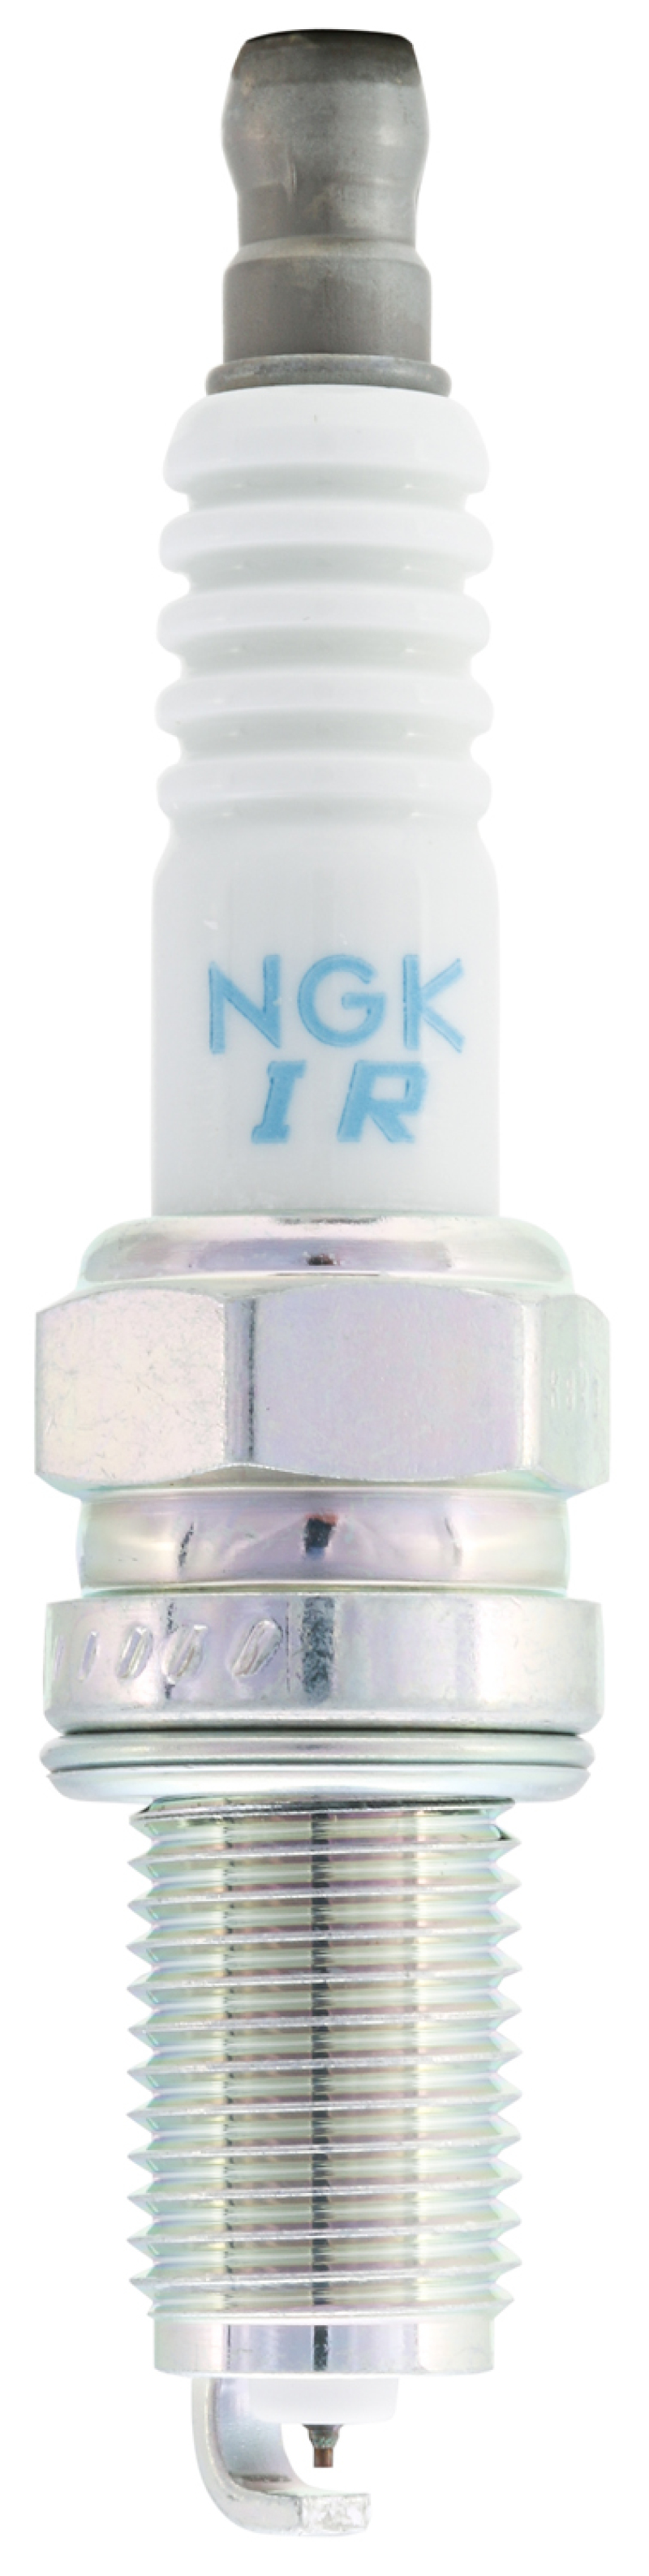 NGK Laser Iridium Spark Plug Box of 4 (KR8BI) - 4347